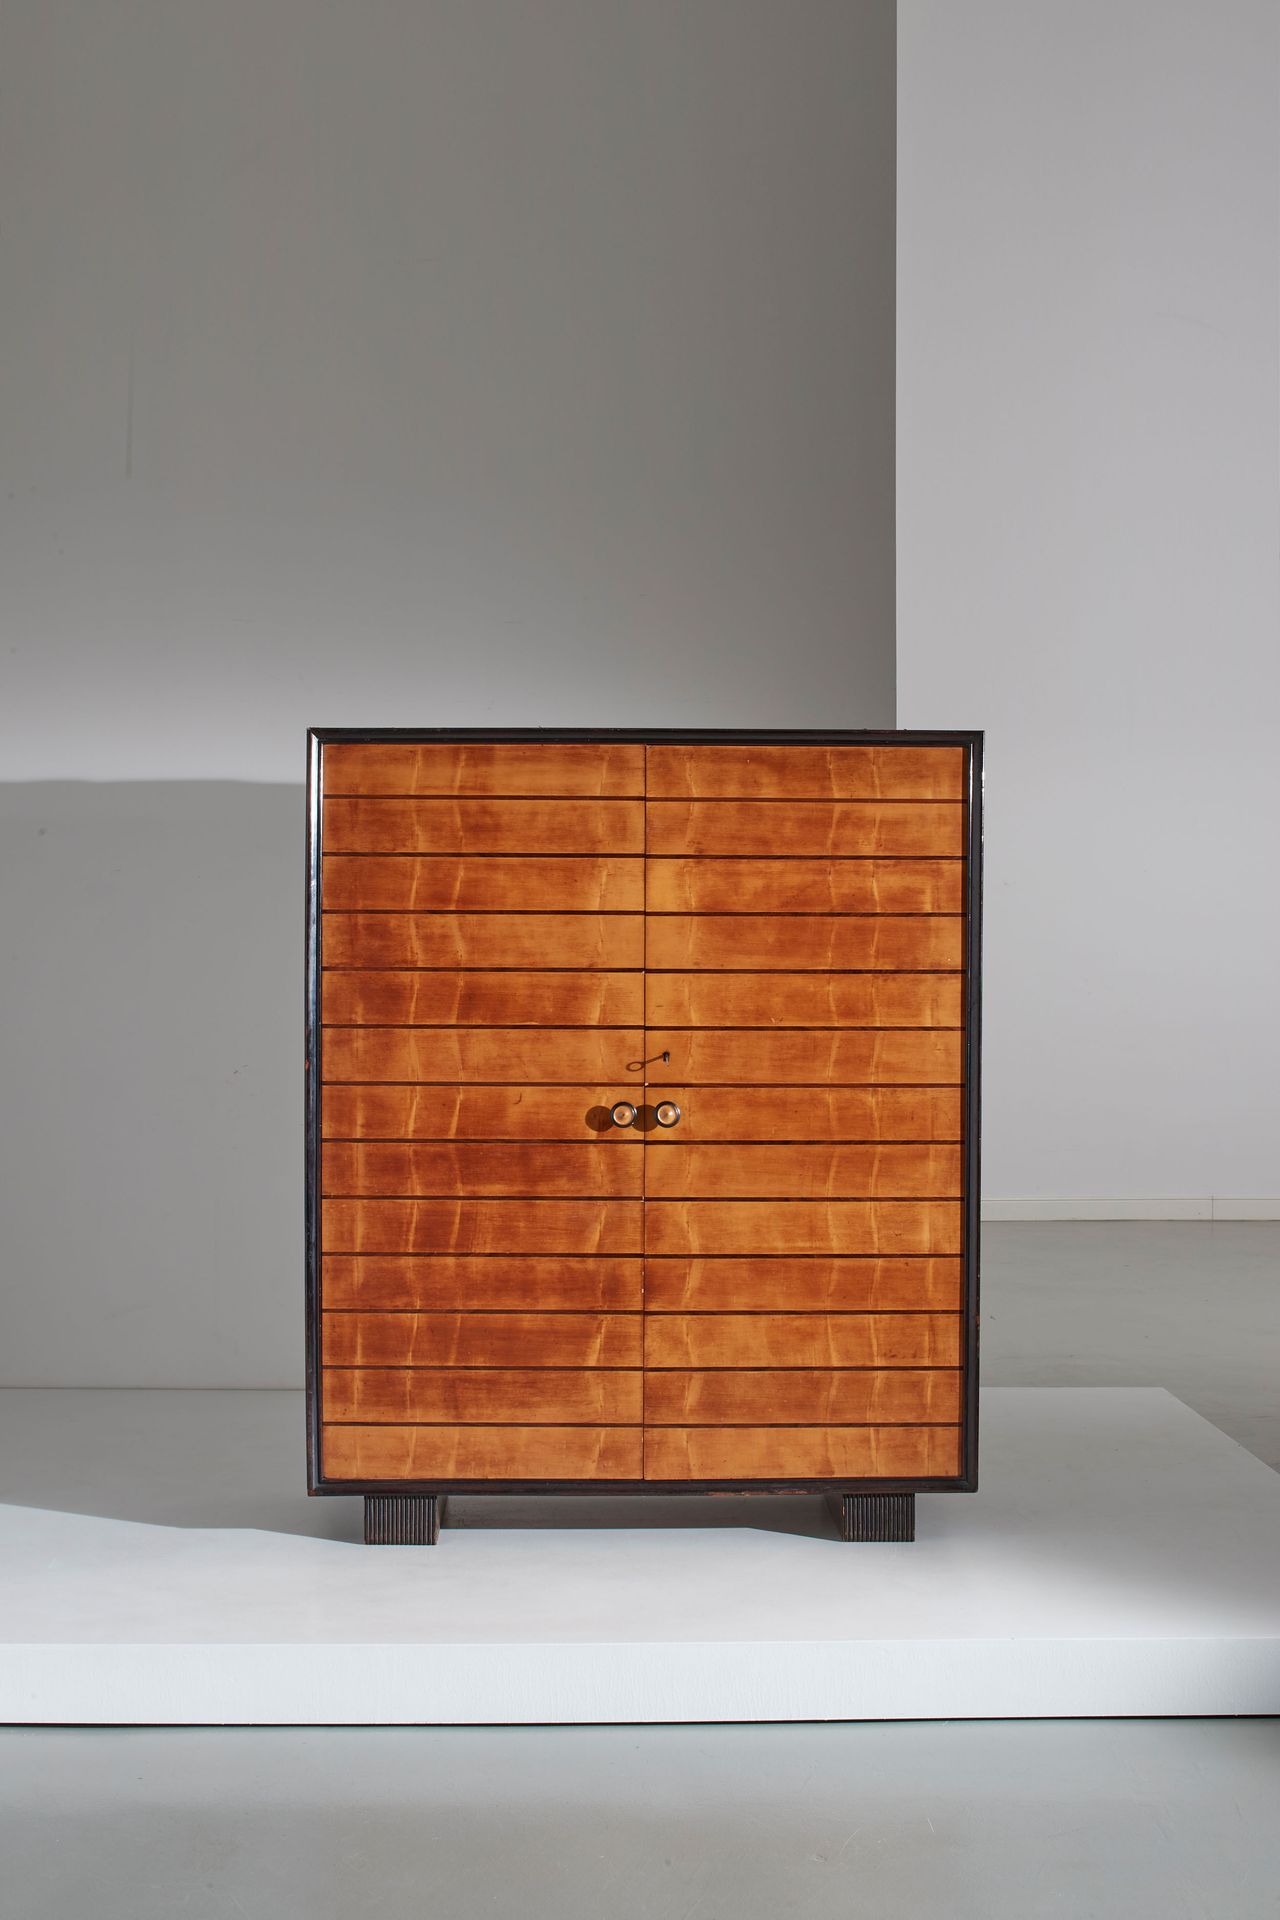 Manifattura Italiana Deco衣柜。枫木，异国情调的木材。
cm 176x145x53.5
AN ITALIAN WARDROBE



状&hellip;